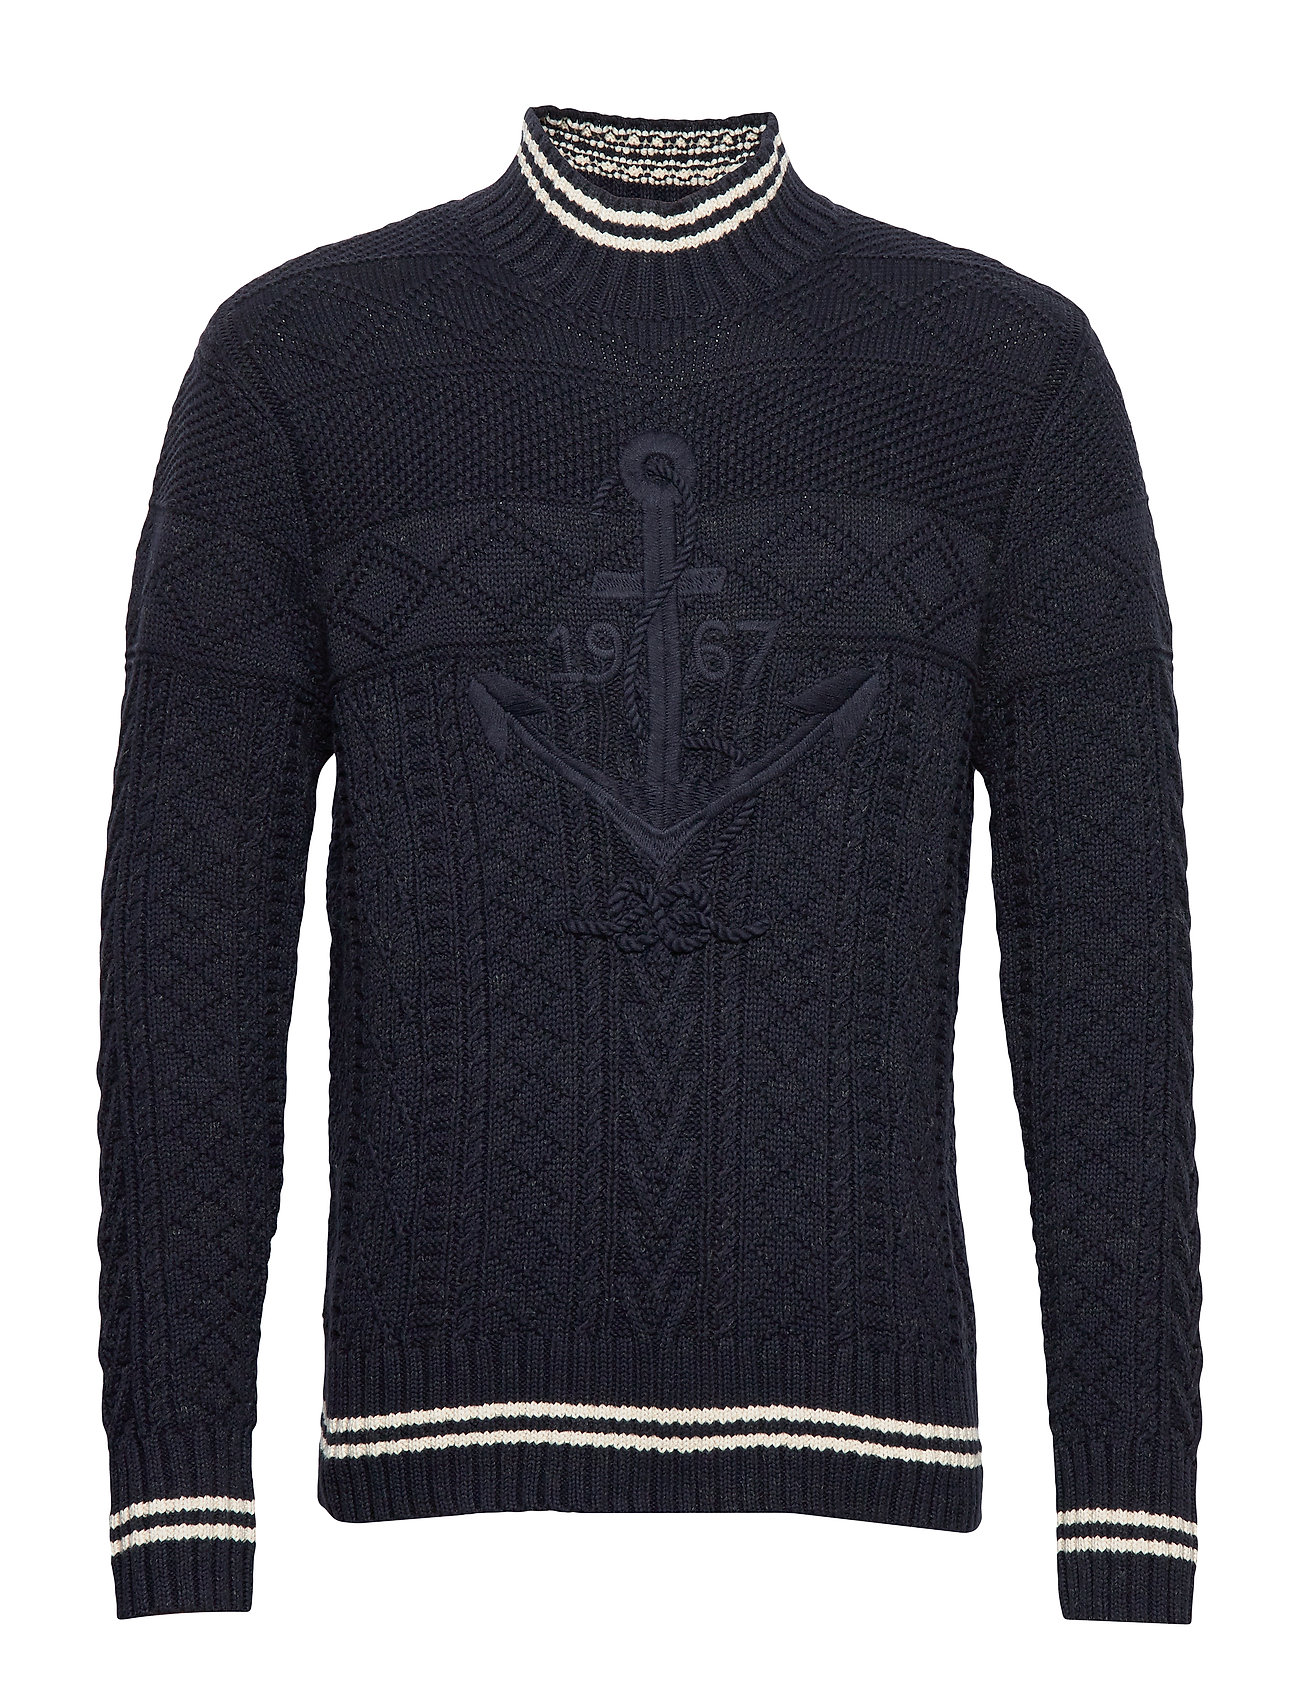 ralph lauren embroidered sweater